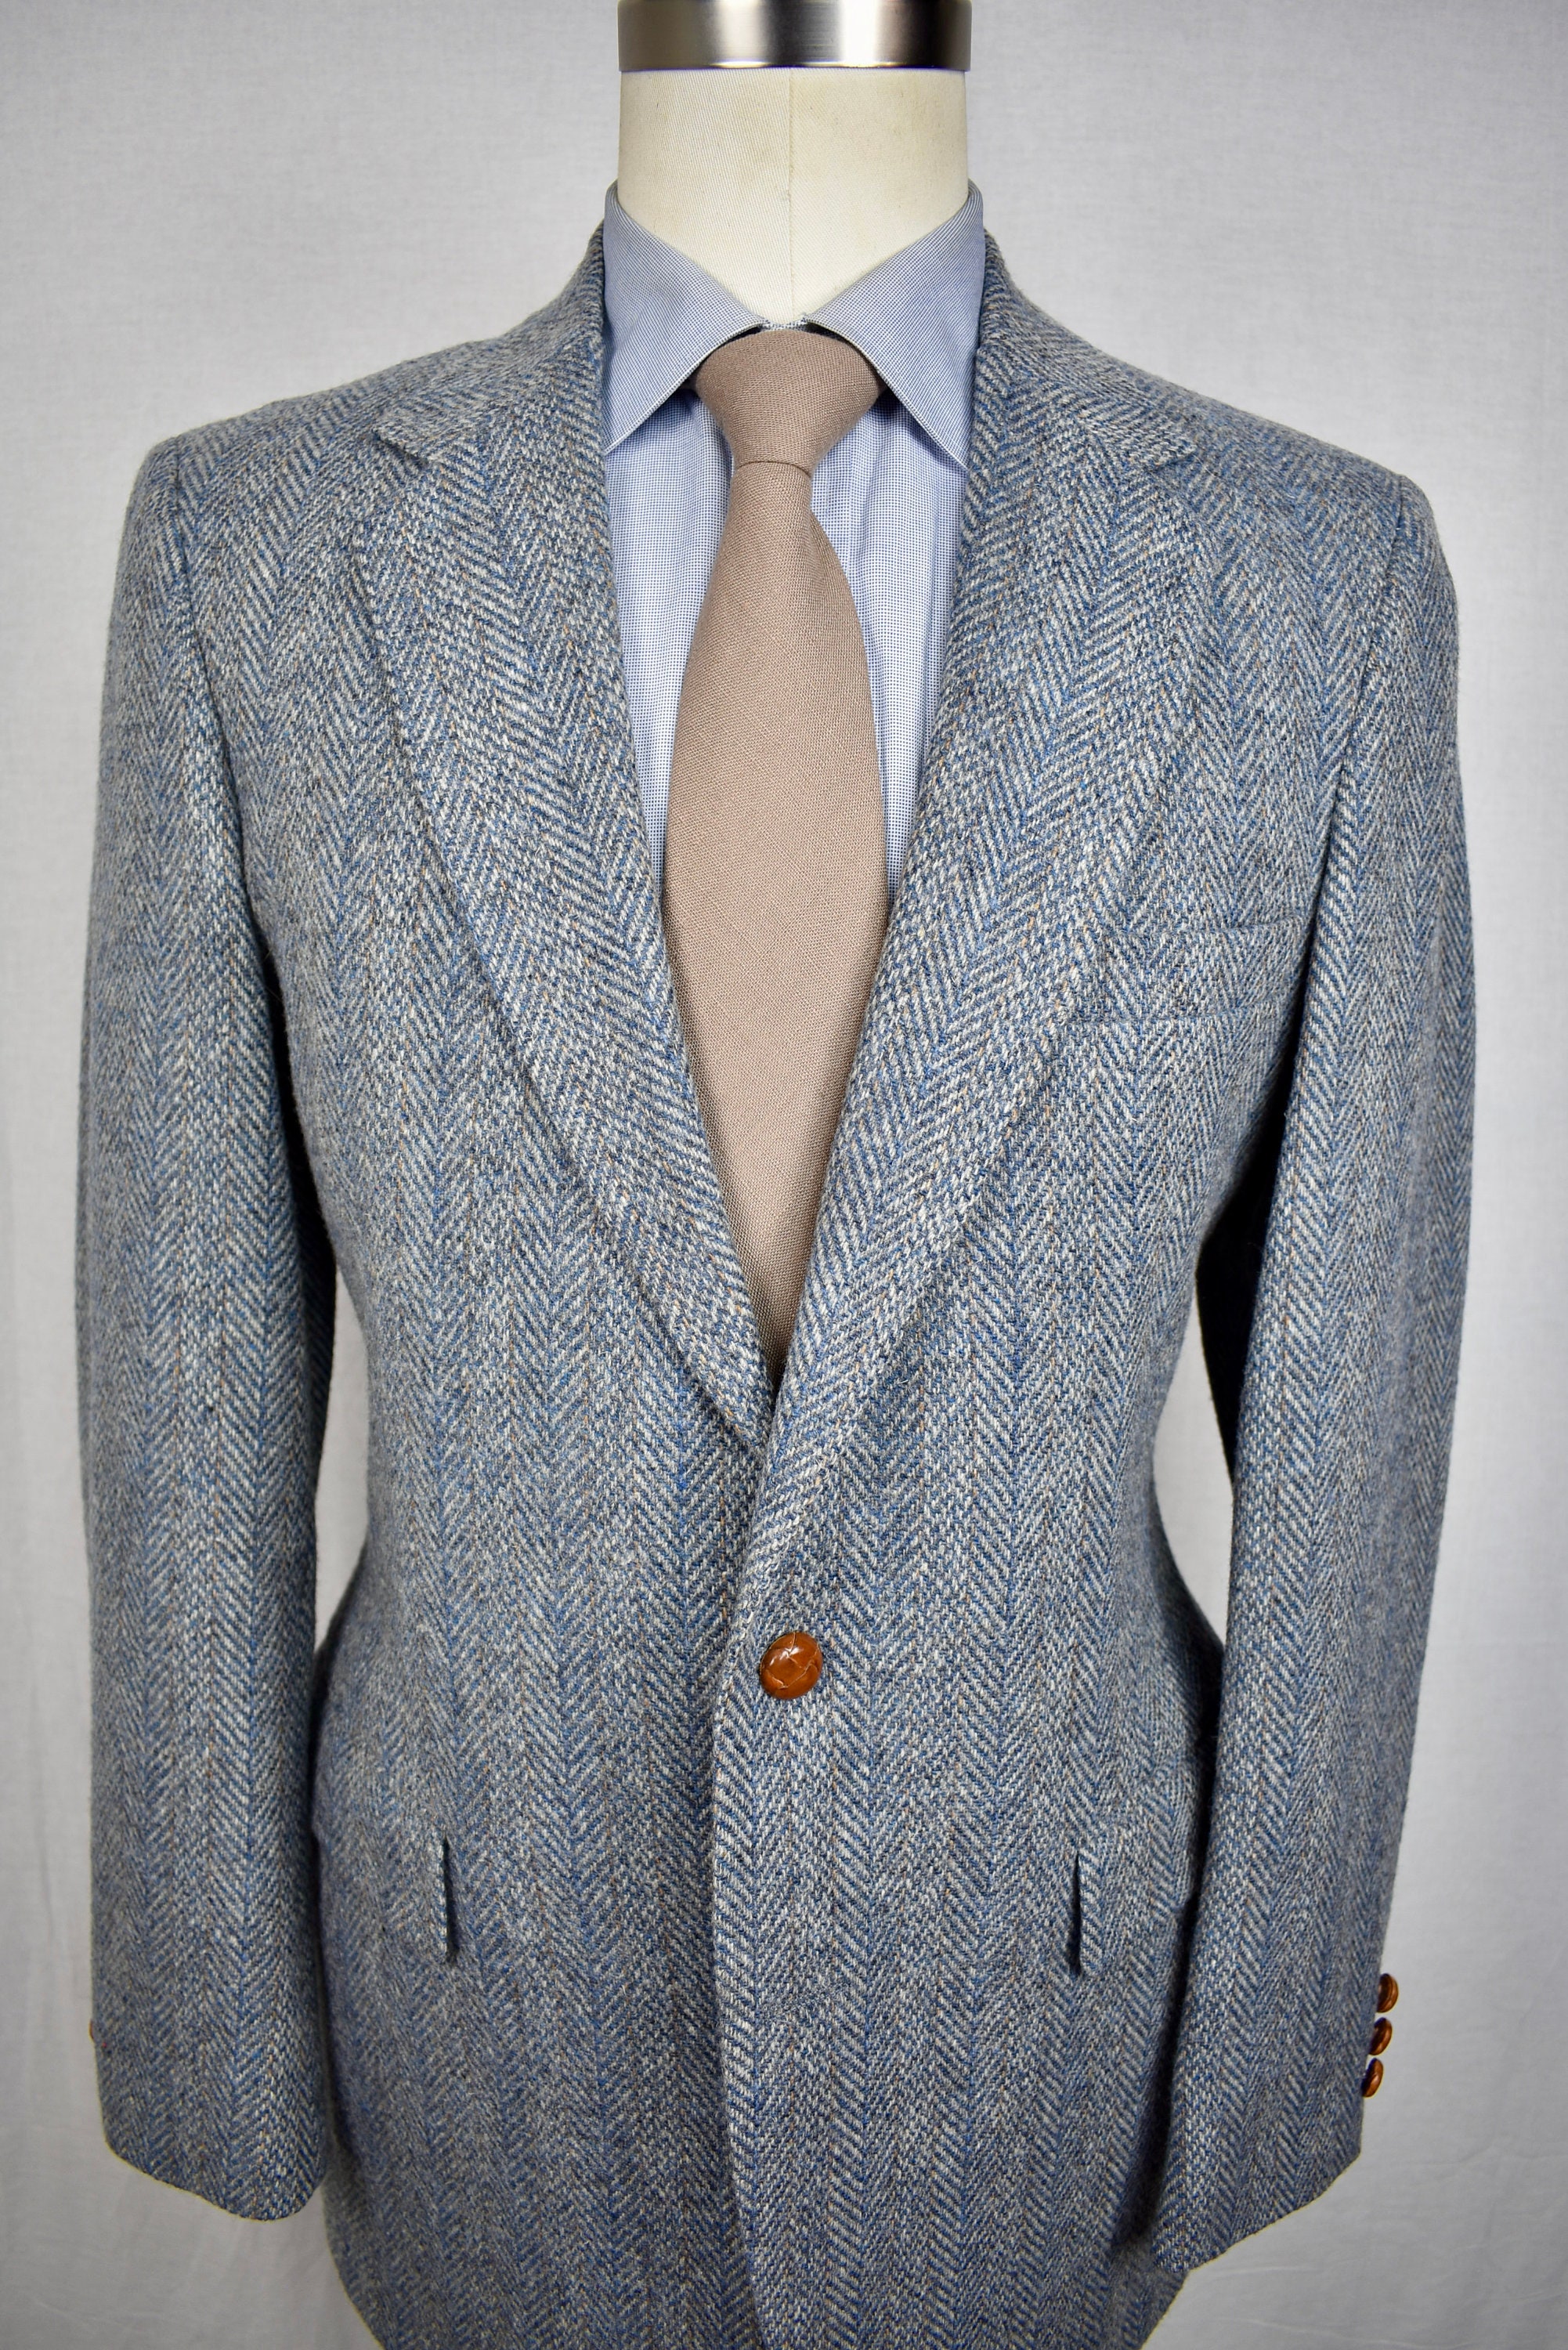 Focus Man in Wool Blue/gray Herringbone 100% Wool Two Button Sport Coat ...